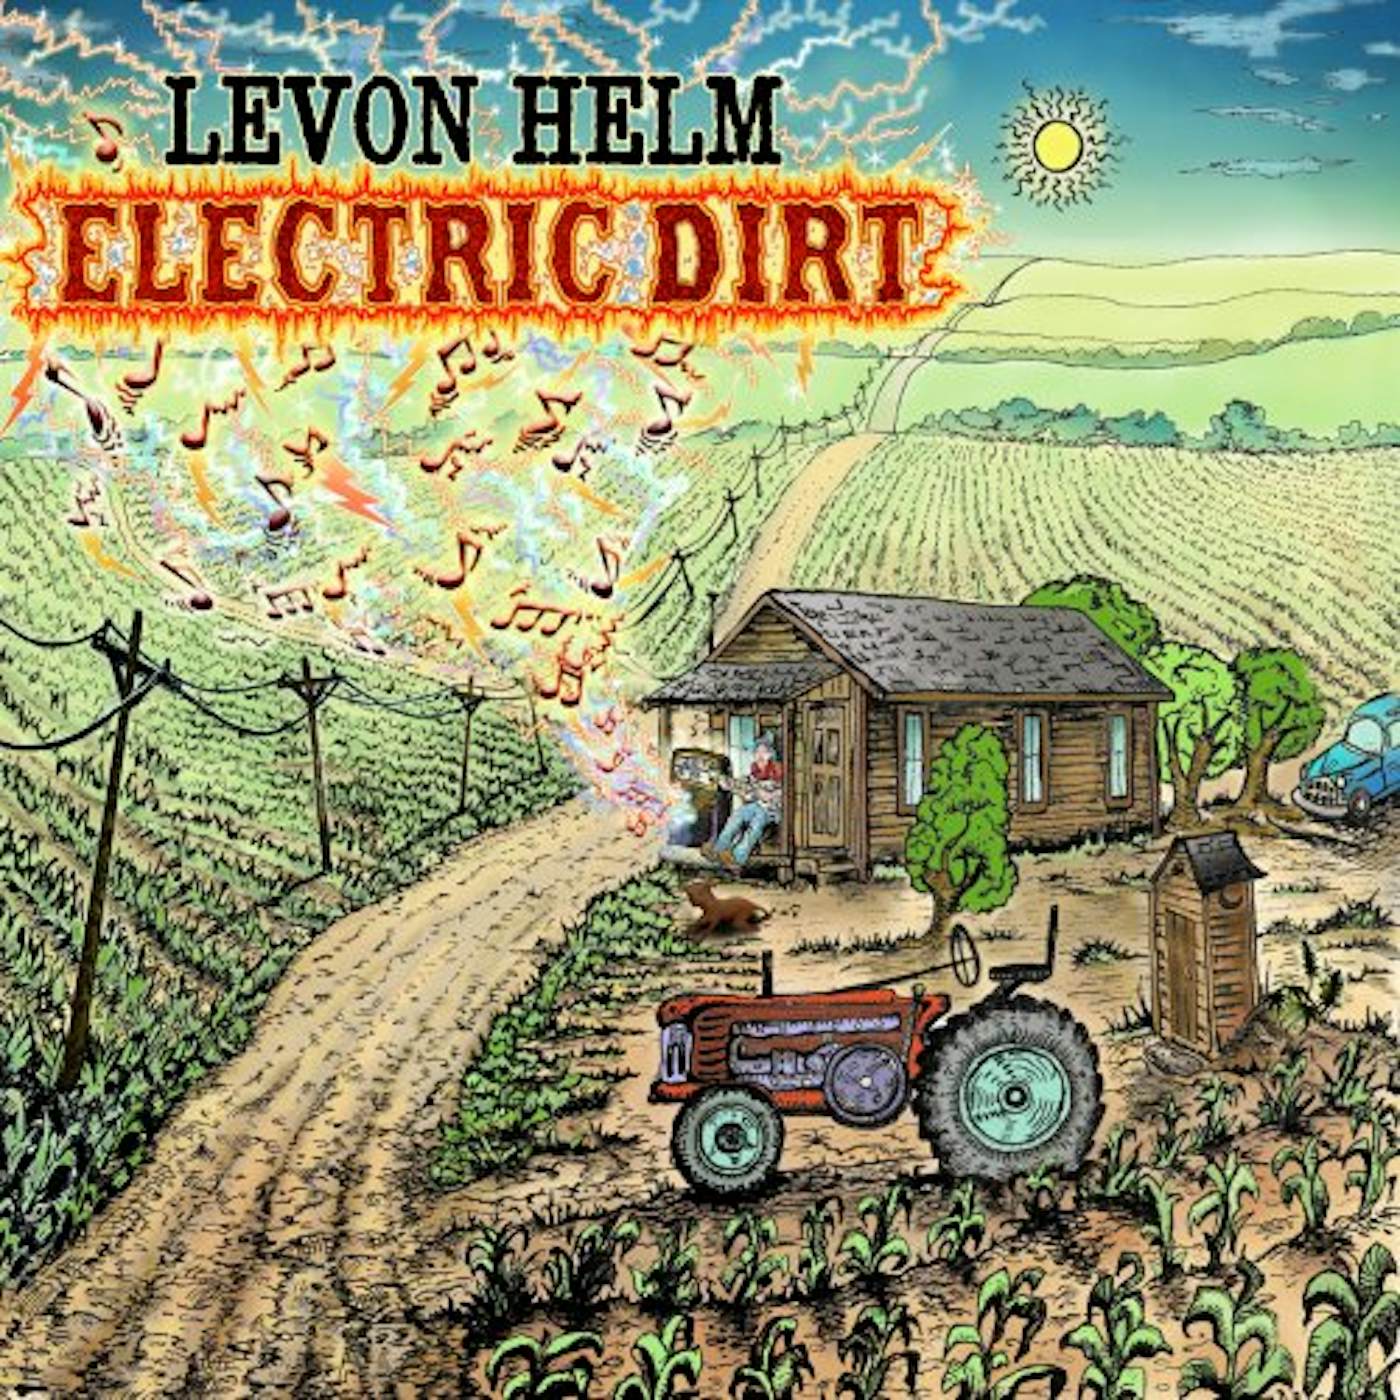 Levon Helm ELECTRIC DIRT CD